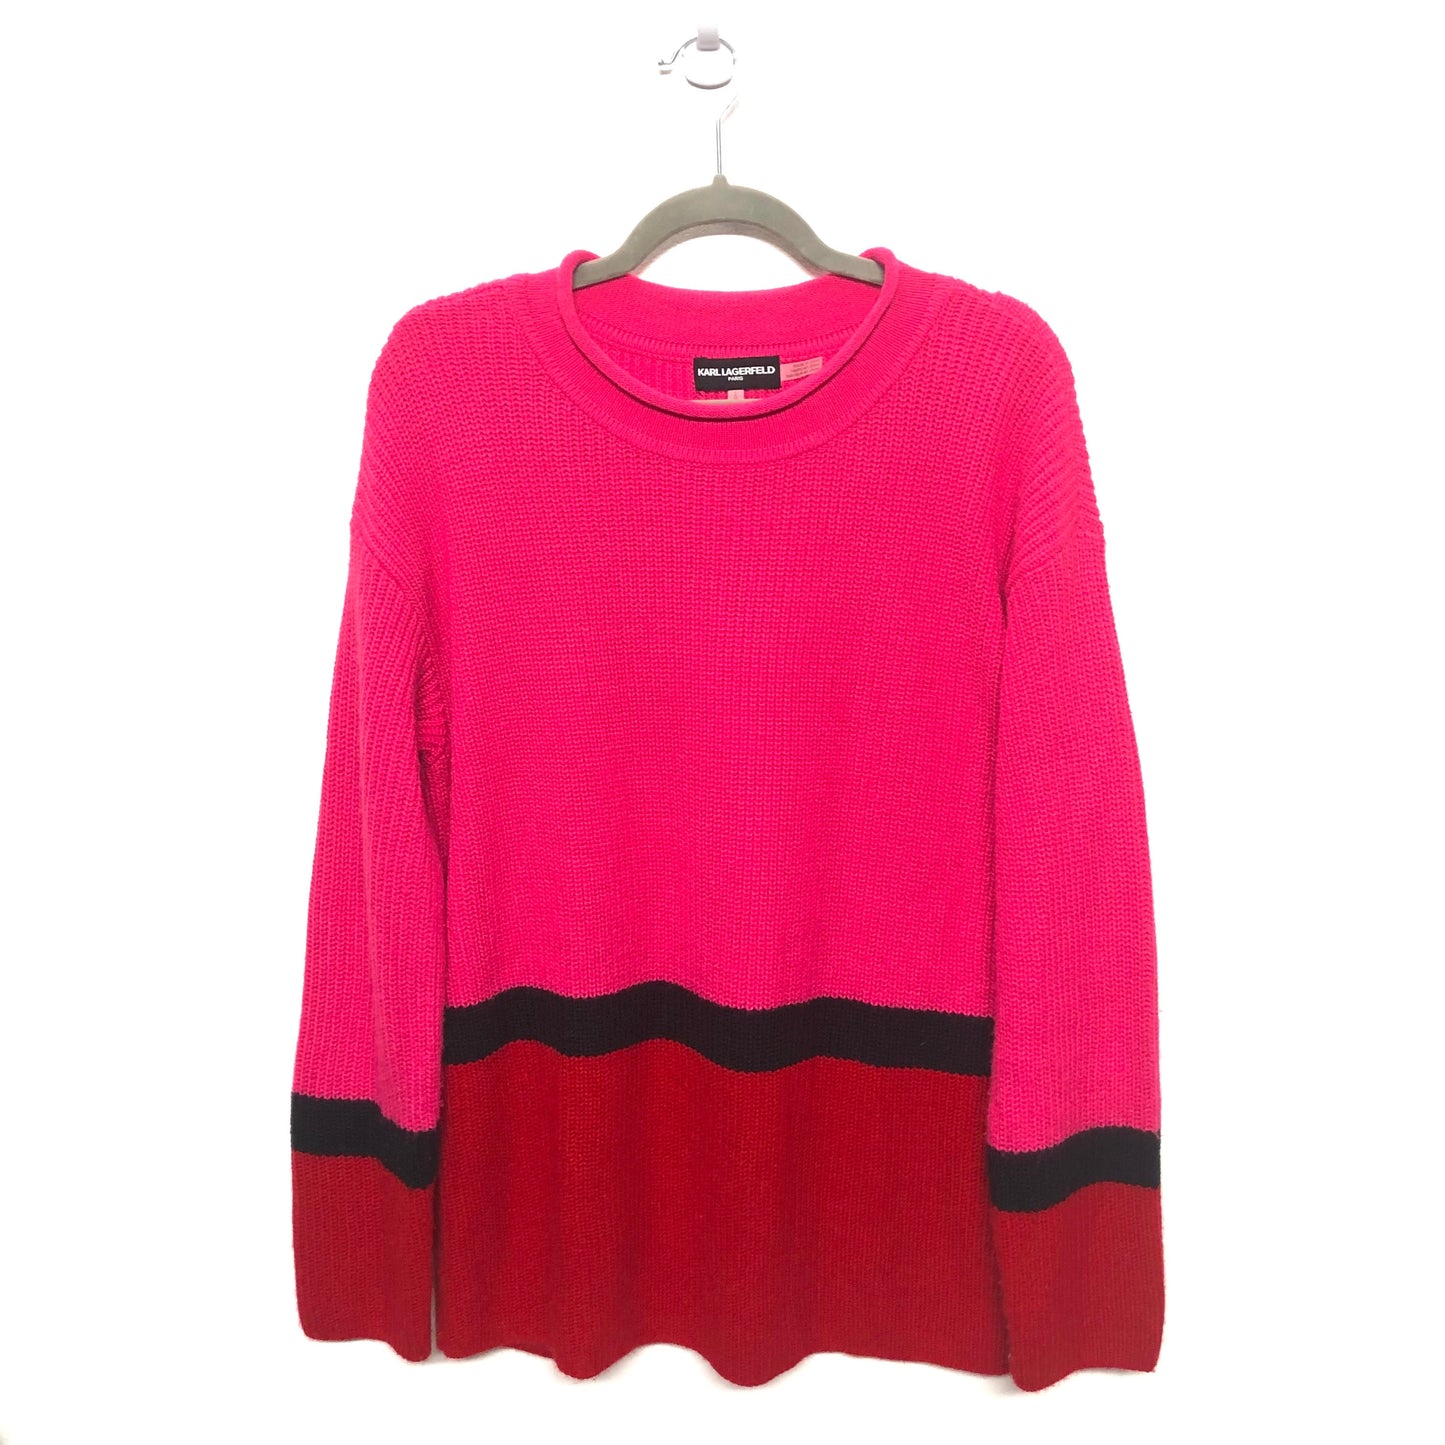 Sweater By Karl Lagerfeld  Size: L